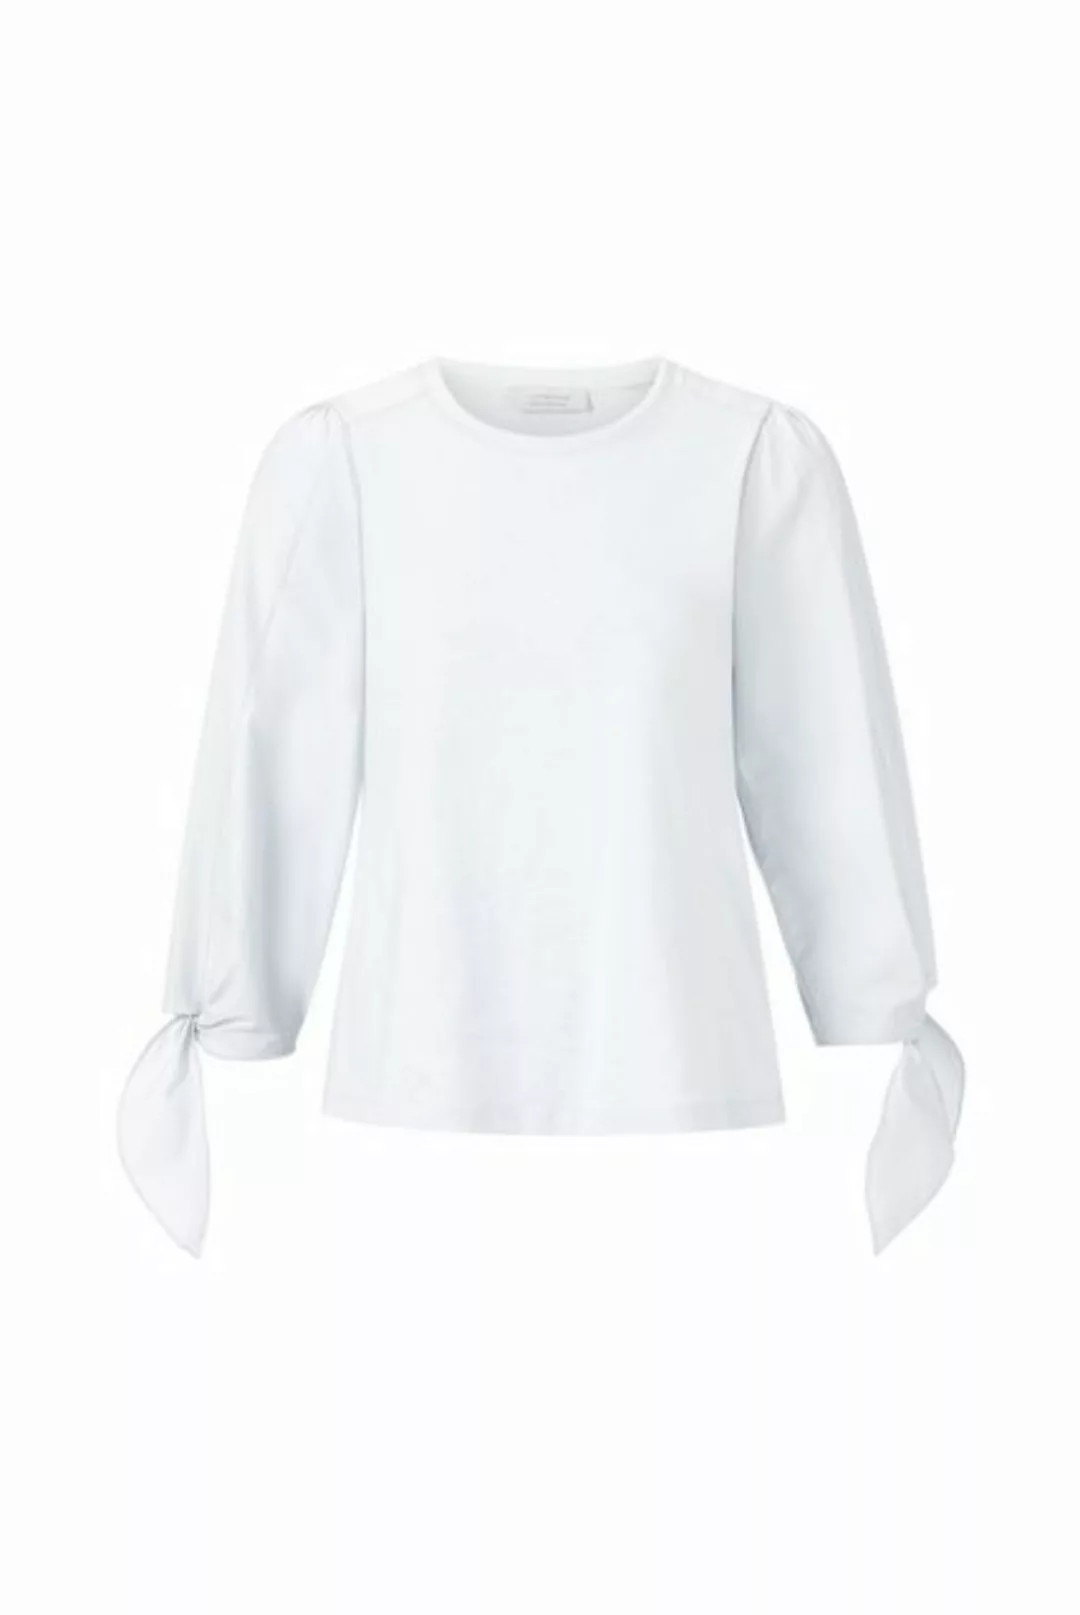 Rich & Royal Blusentop cotton mix blouse günstig online kaufen